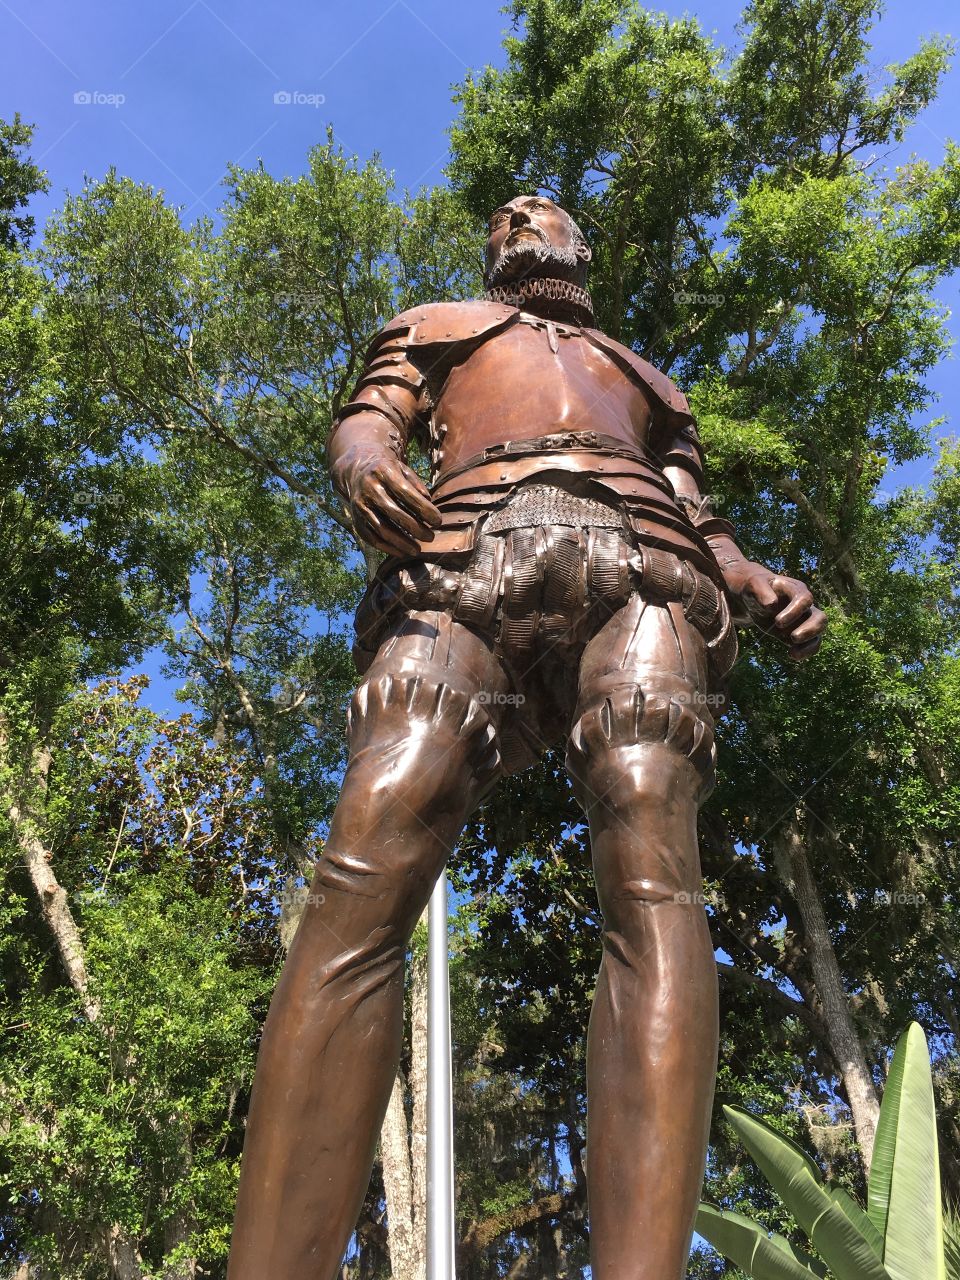 Pedro Menendez de Avilas statue at the Fountain of Youth in Florida 